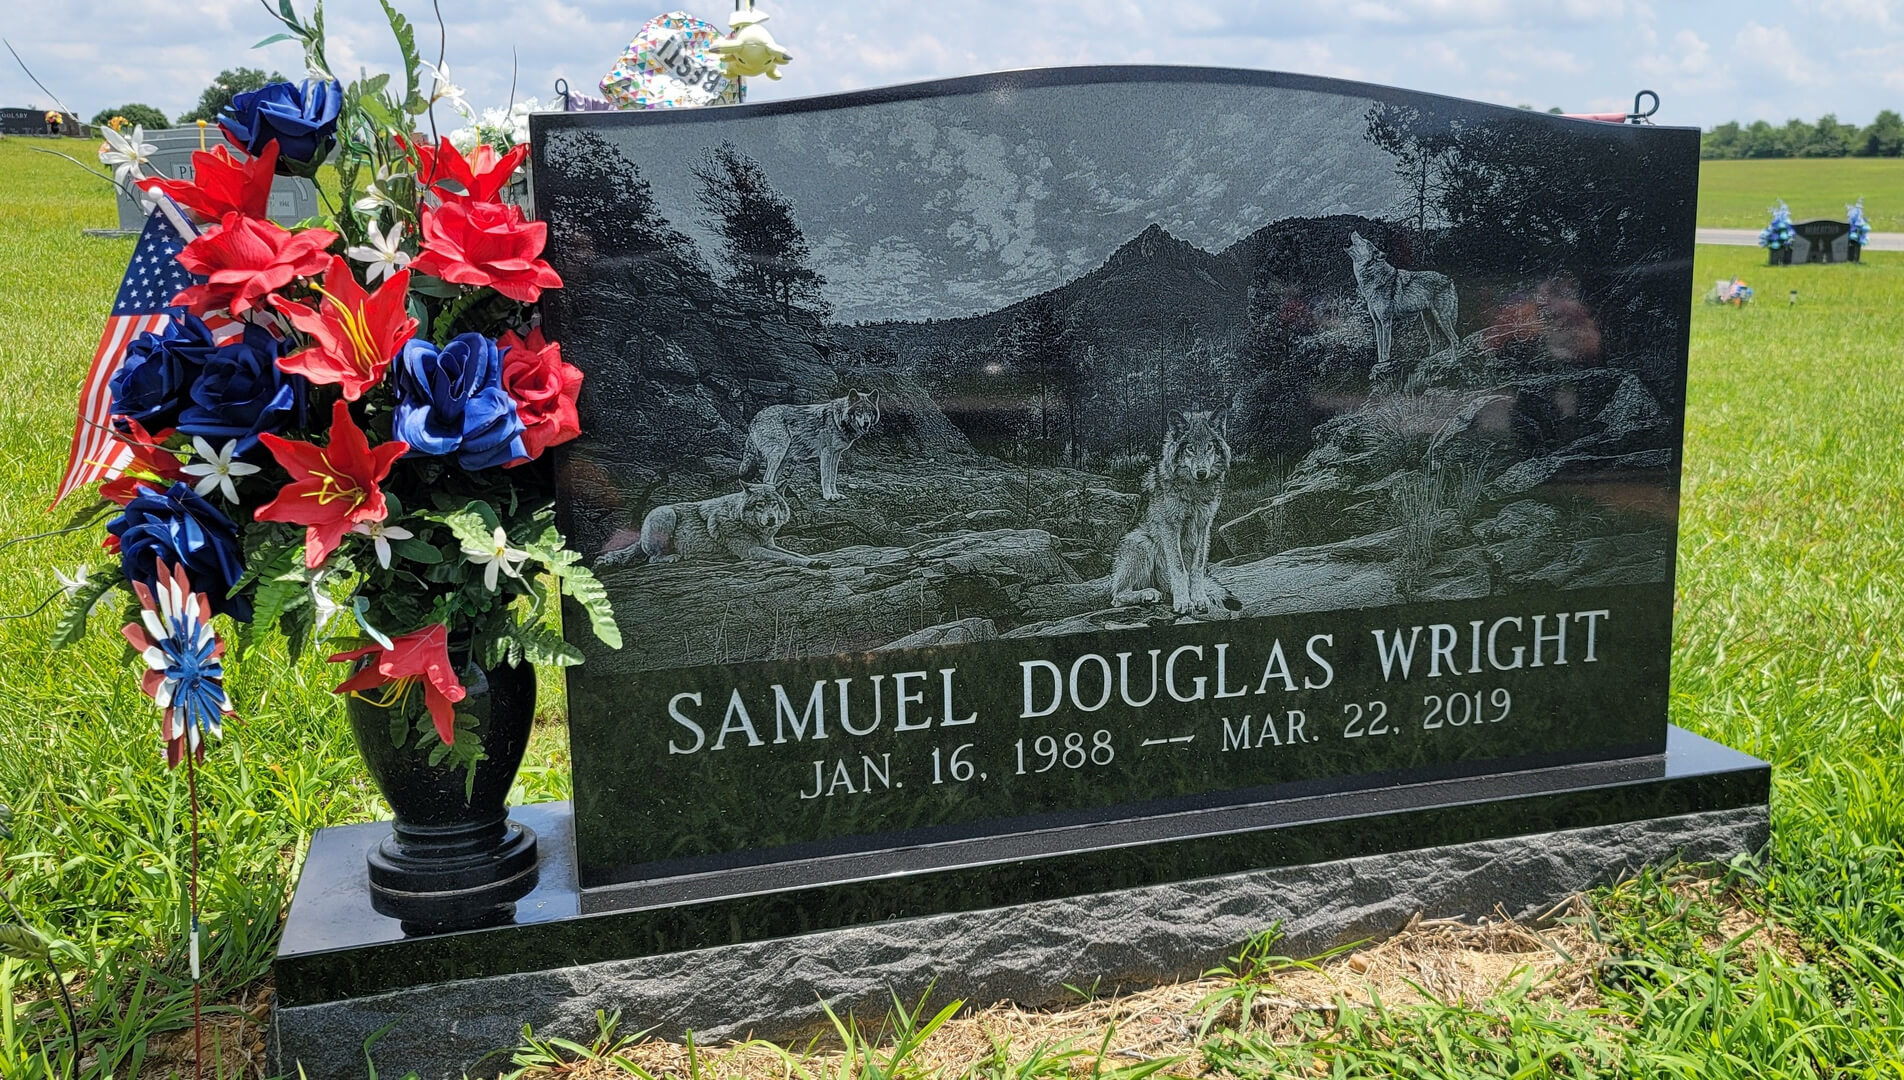 A memorial slab for Samuel Douglas Wright with flowers